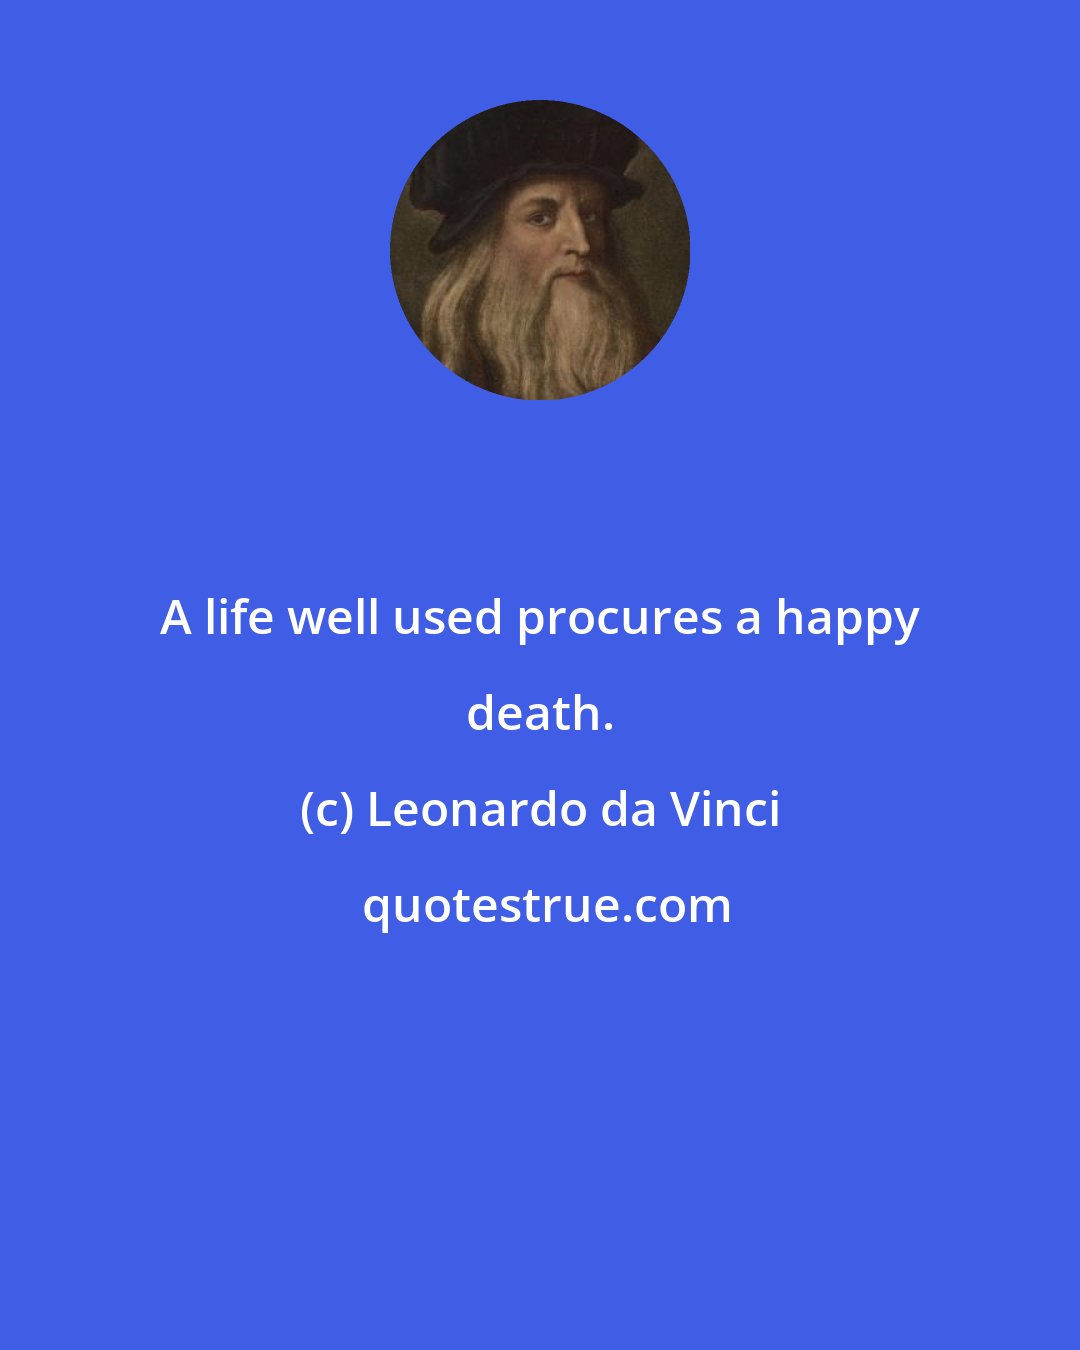 Leonardo da Vinci: A life well used procures a happy death.